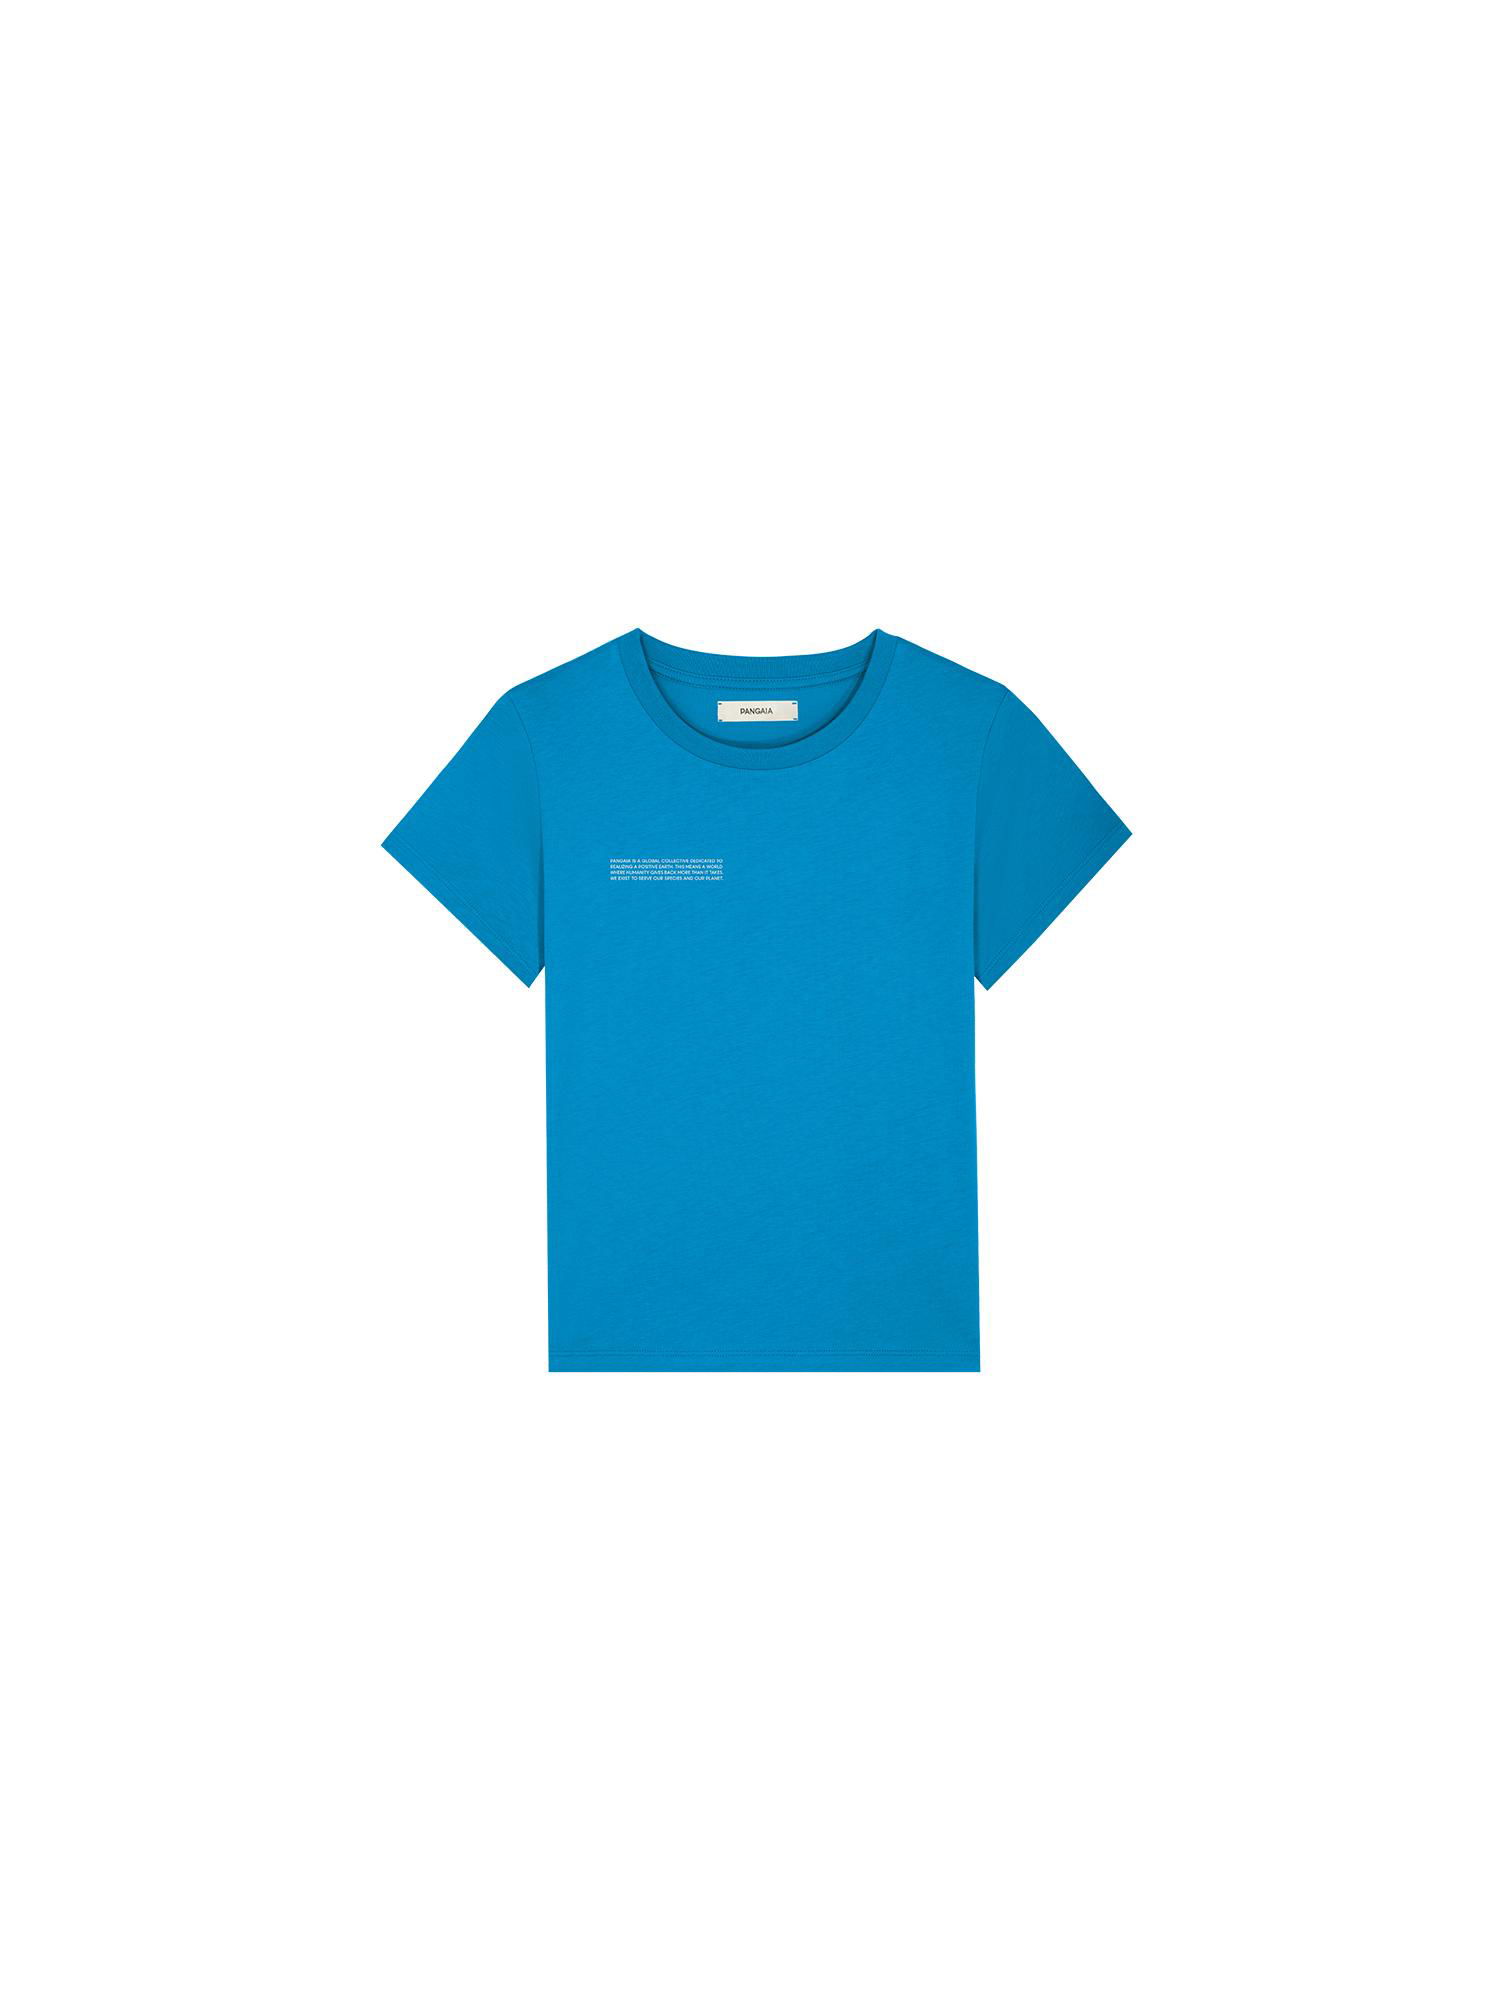 Kids' 365 Midweight T-shirt—geyser-blue by PANGAIA